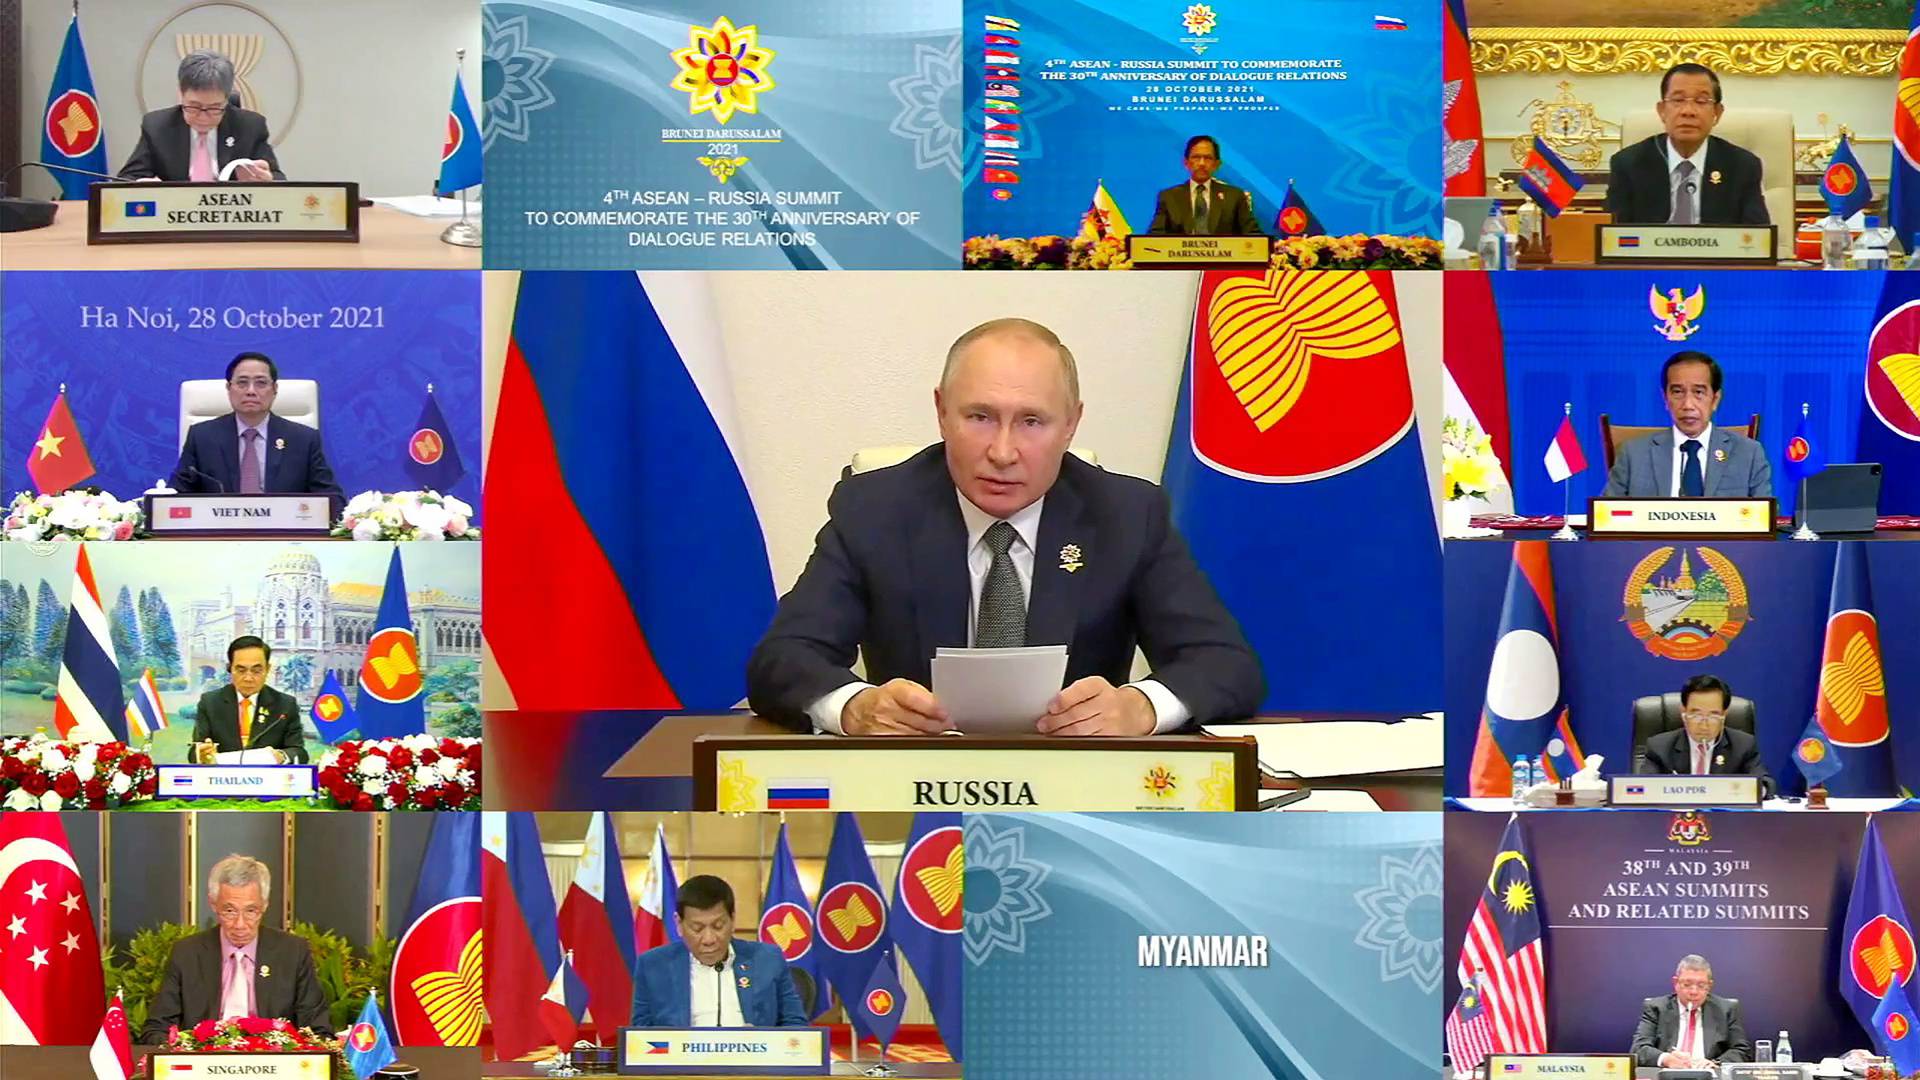 Russia's President Vladimir Putin speaks during the virtual ASEAN Russia Summit, hosted by ASEAN Summit Brunei, in Bandar Seri Begawan